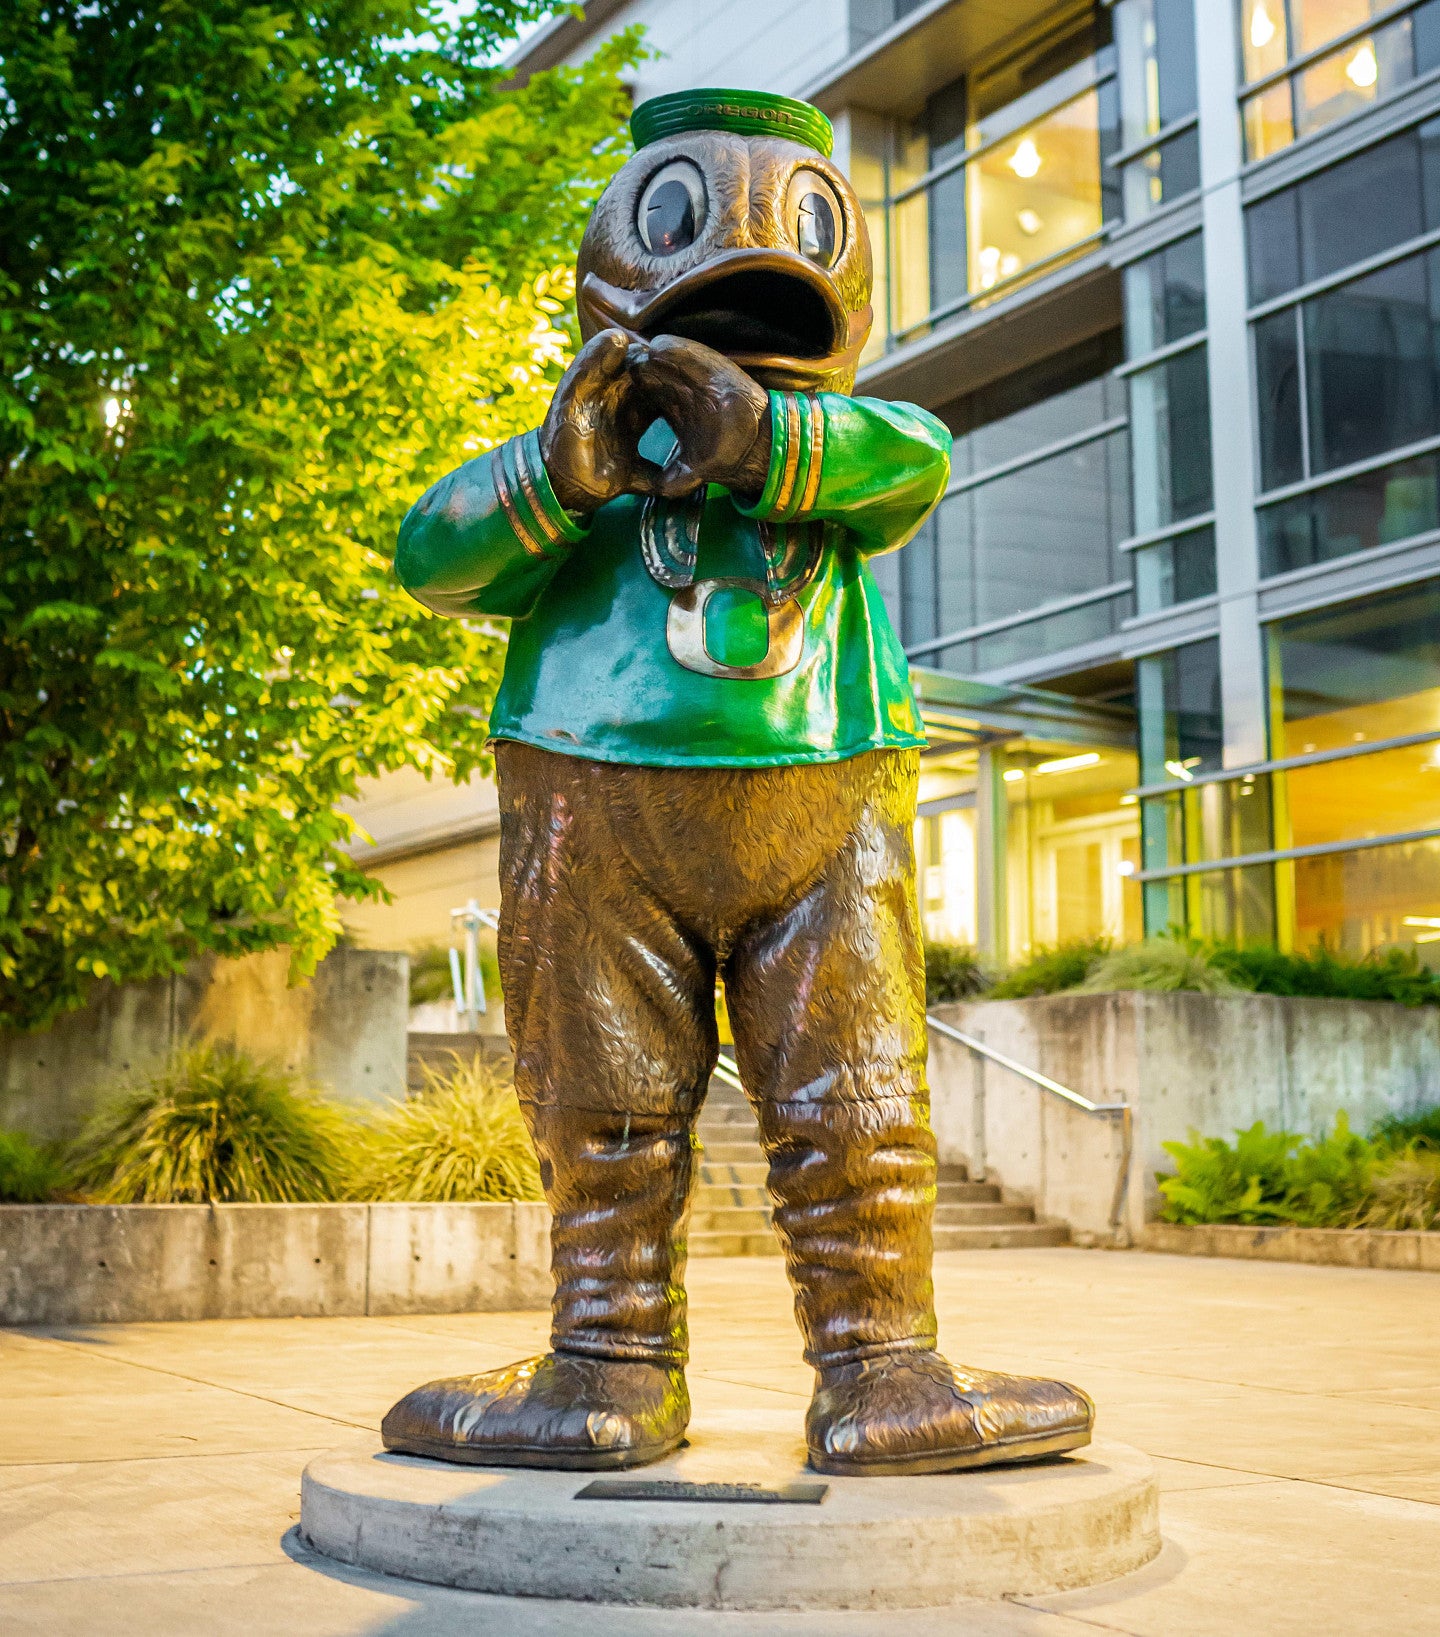 Statue of the Oregon Duck